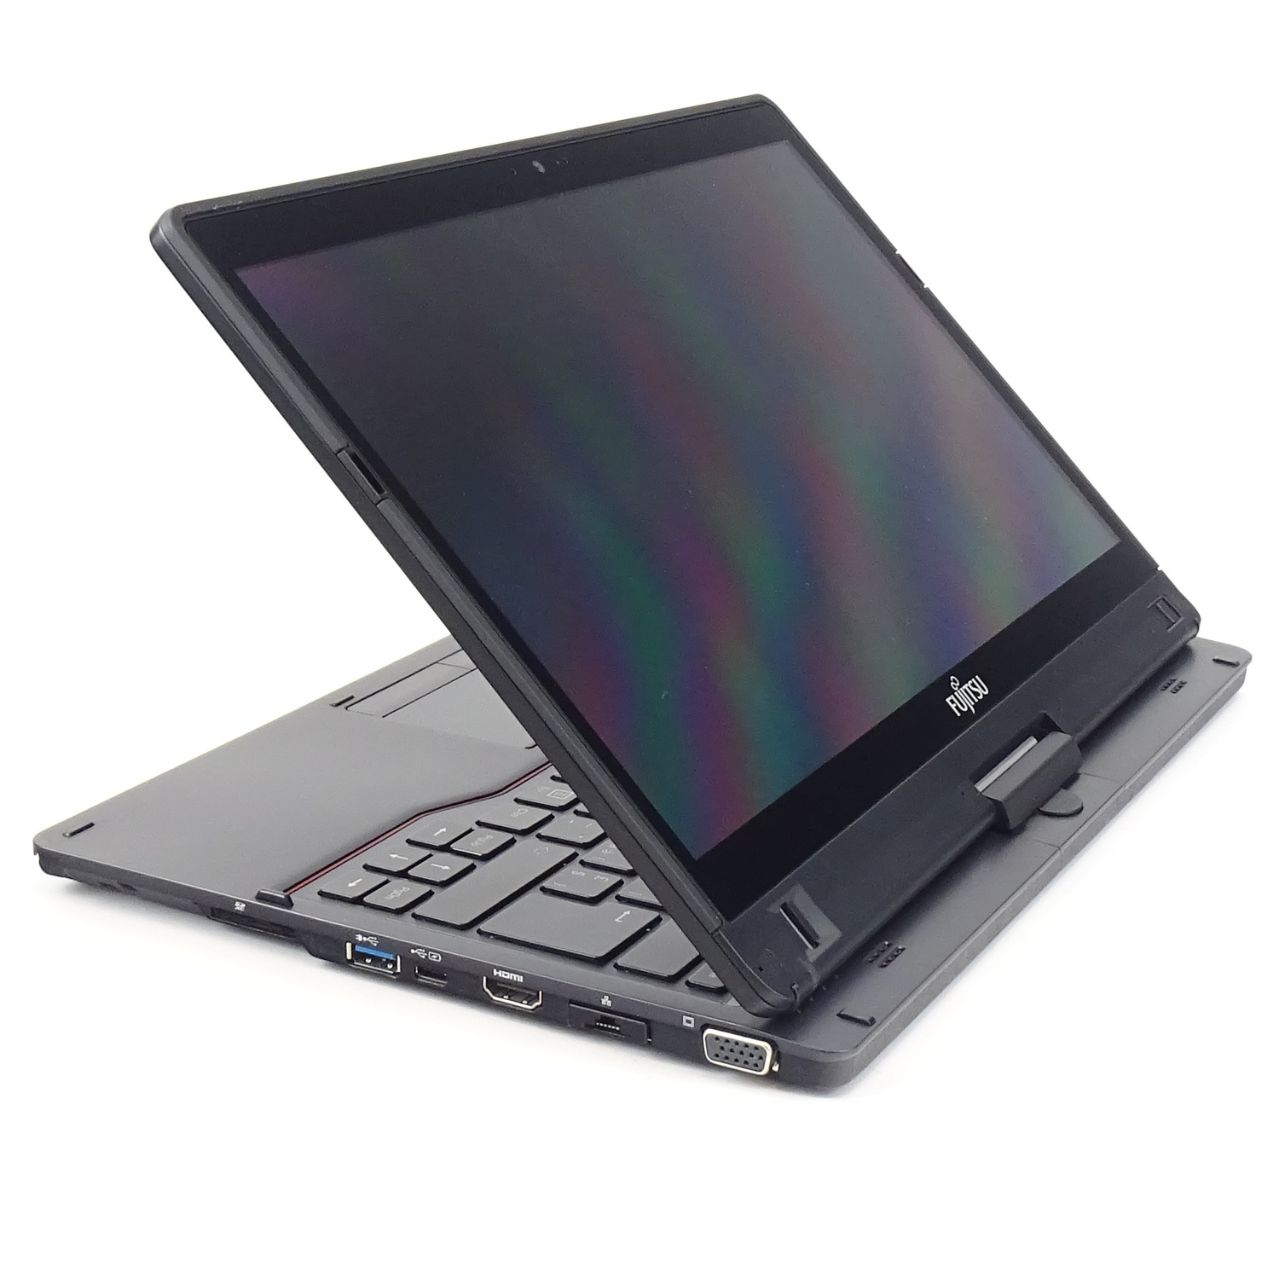 Fujitsu LifeBook T937 

 - 13,3 Zoll - Intel Core i7 7600U @ 2,8 GHz - 8 GB - 256 GB SSD - 1920 x 1080 FHD - Touchscreen - Windows 10 Professional - Sehr gut